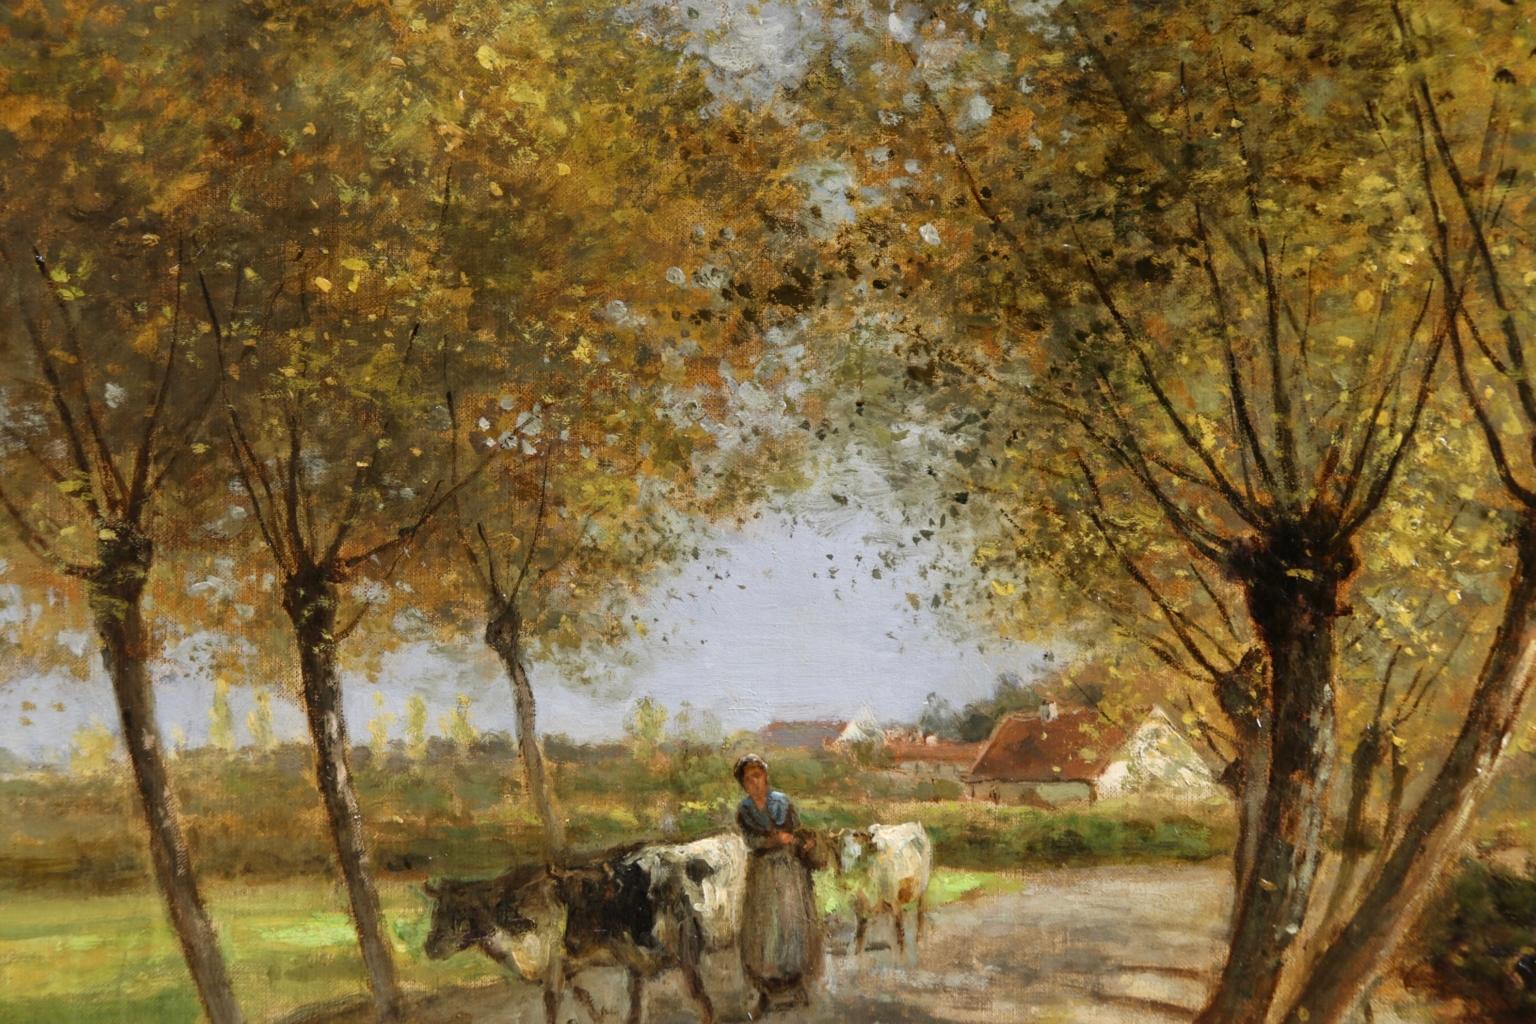 Herder & Cattle - Barbizon Oil, Figures & Cows in Landscape by Cesar De Cock 1